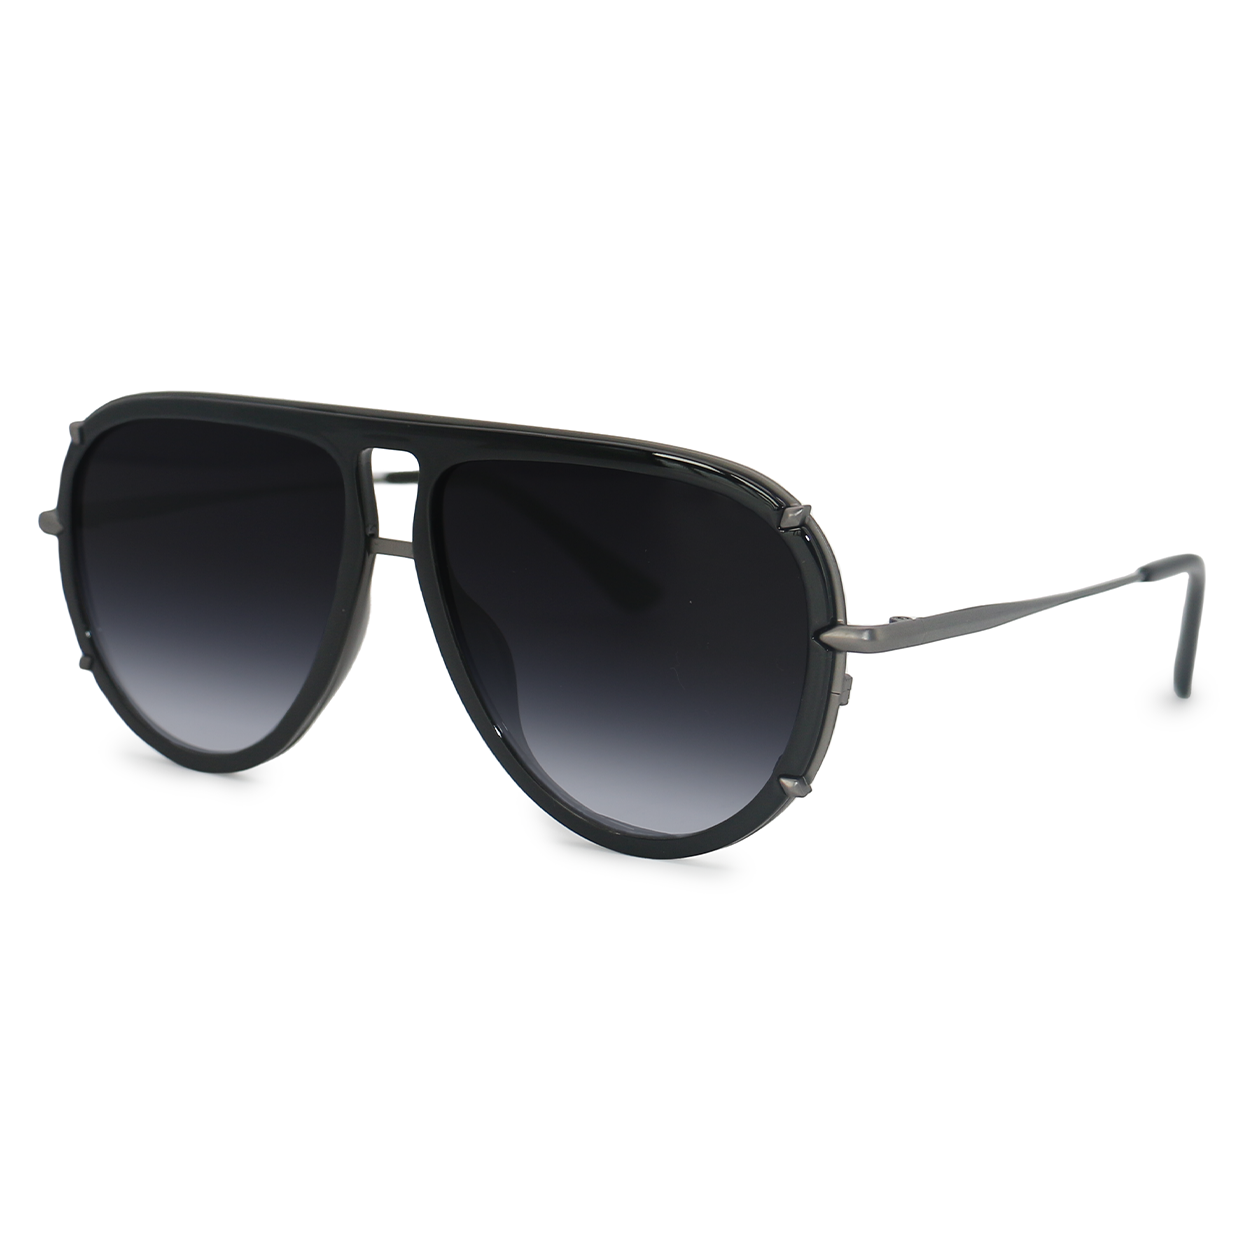 Aviator Sunglasses - Oversized sustainable sunglasses for Women - Ivy Luxe Black - Side Details - TopFoxx